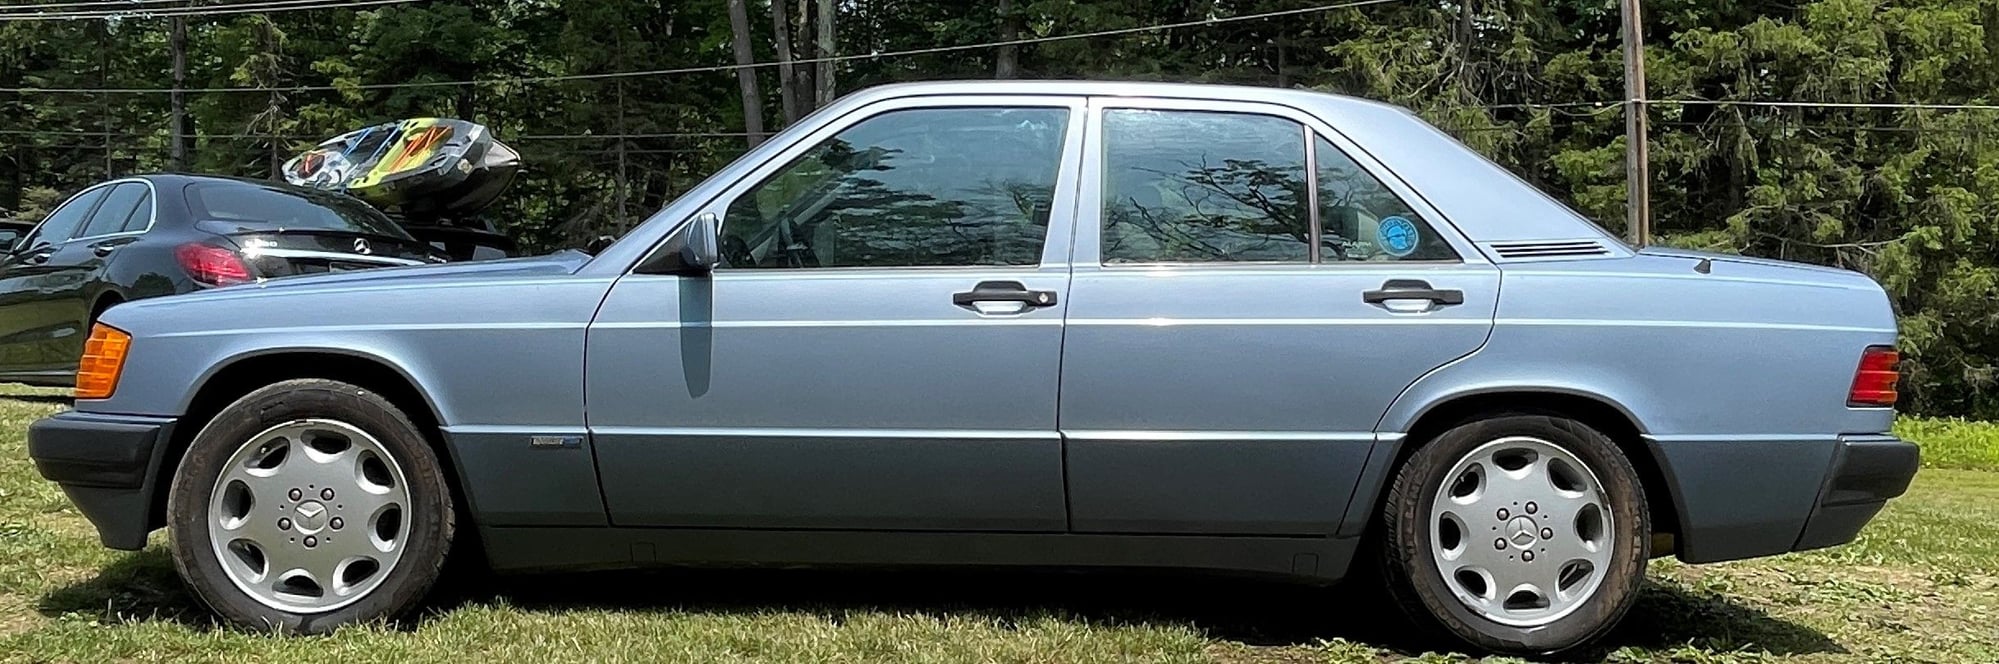 1993 Mercedes-Benz 190E - 1993 190E 2.6 | Sportline | Final Production Year - Used - VIN WDBDA29DXPG013337 - 94,000 Miles - 6 cyl - 2WD - Automatic - Sedan - Blue - Greensburg, PA 15601, United States